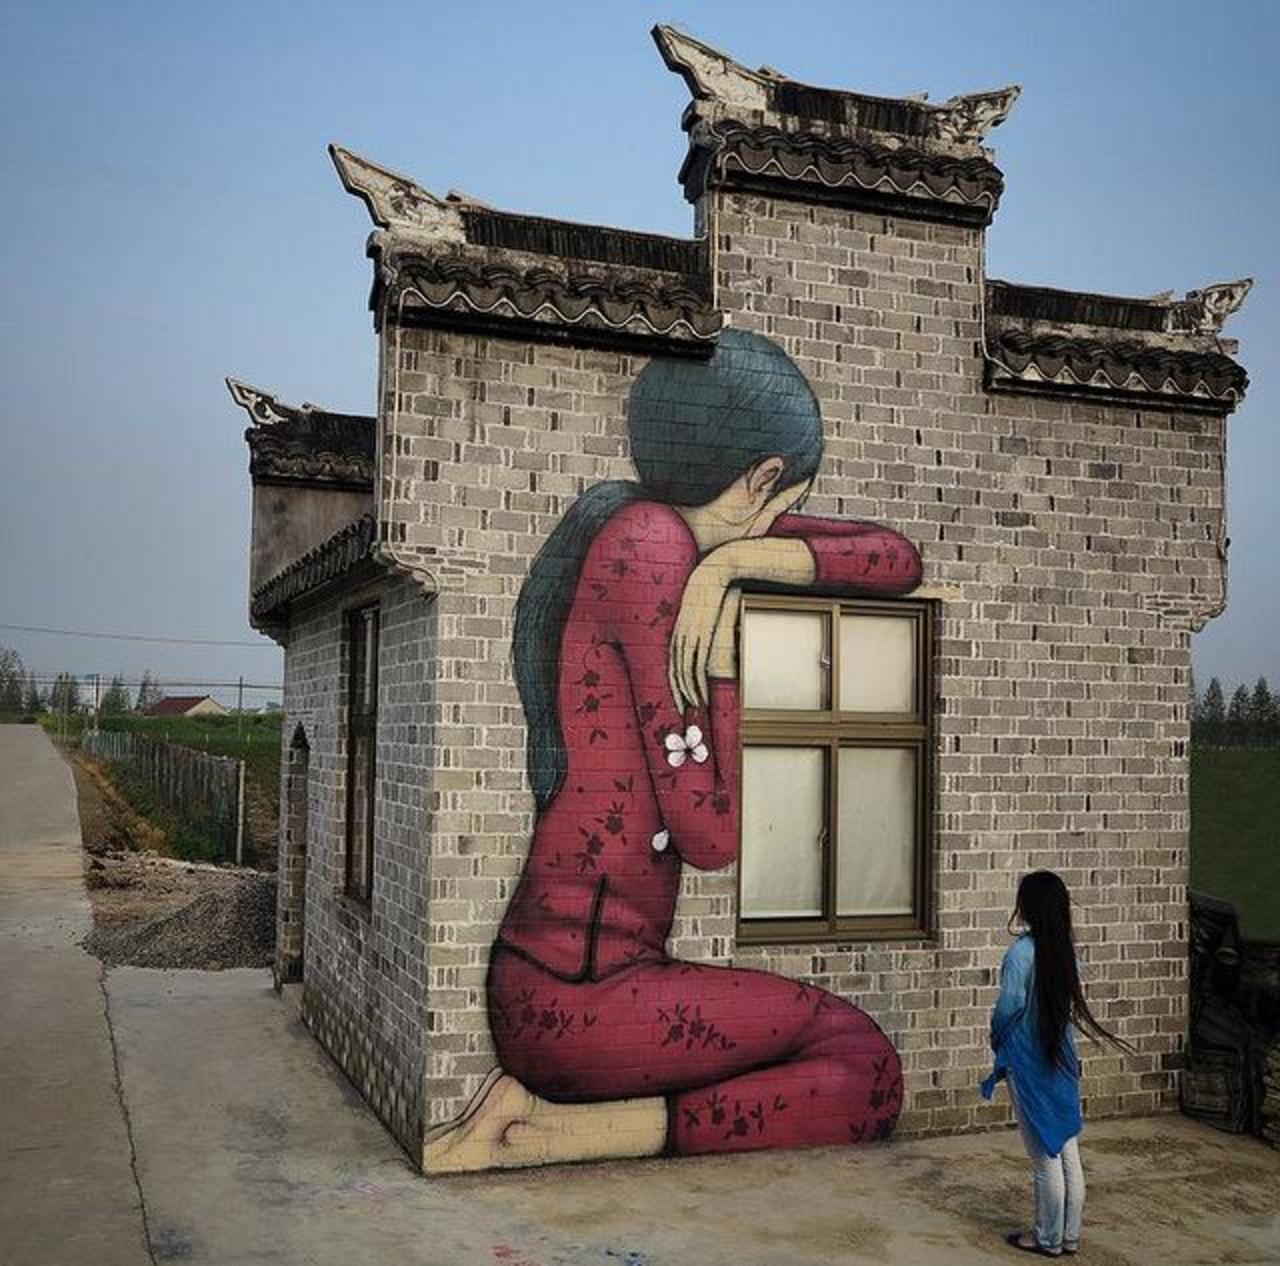 RT GoogleStreetArt "New Street Art by Seth Globepainter in Fengzing, China 

#art #arte #graffiti #streetart http://t.co/4eYxG6nefU"